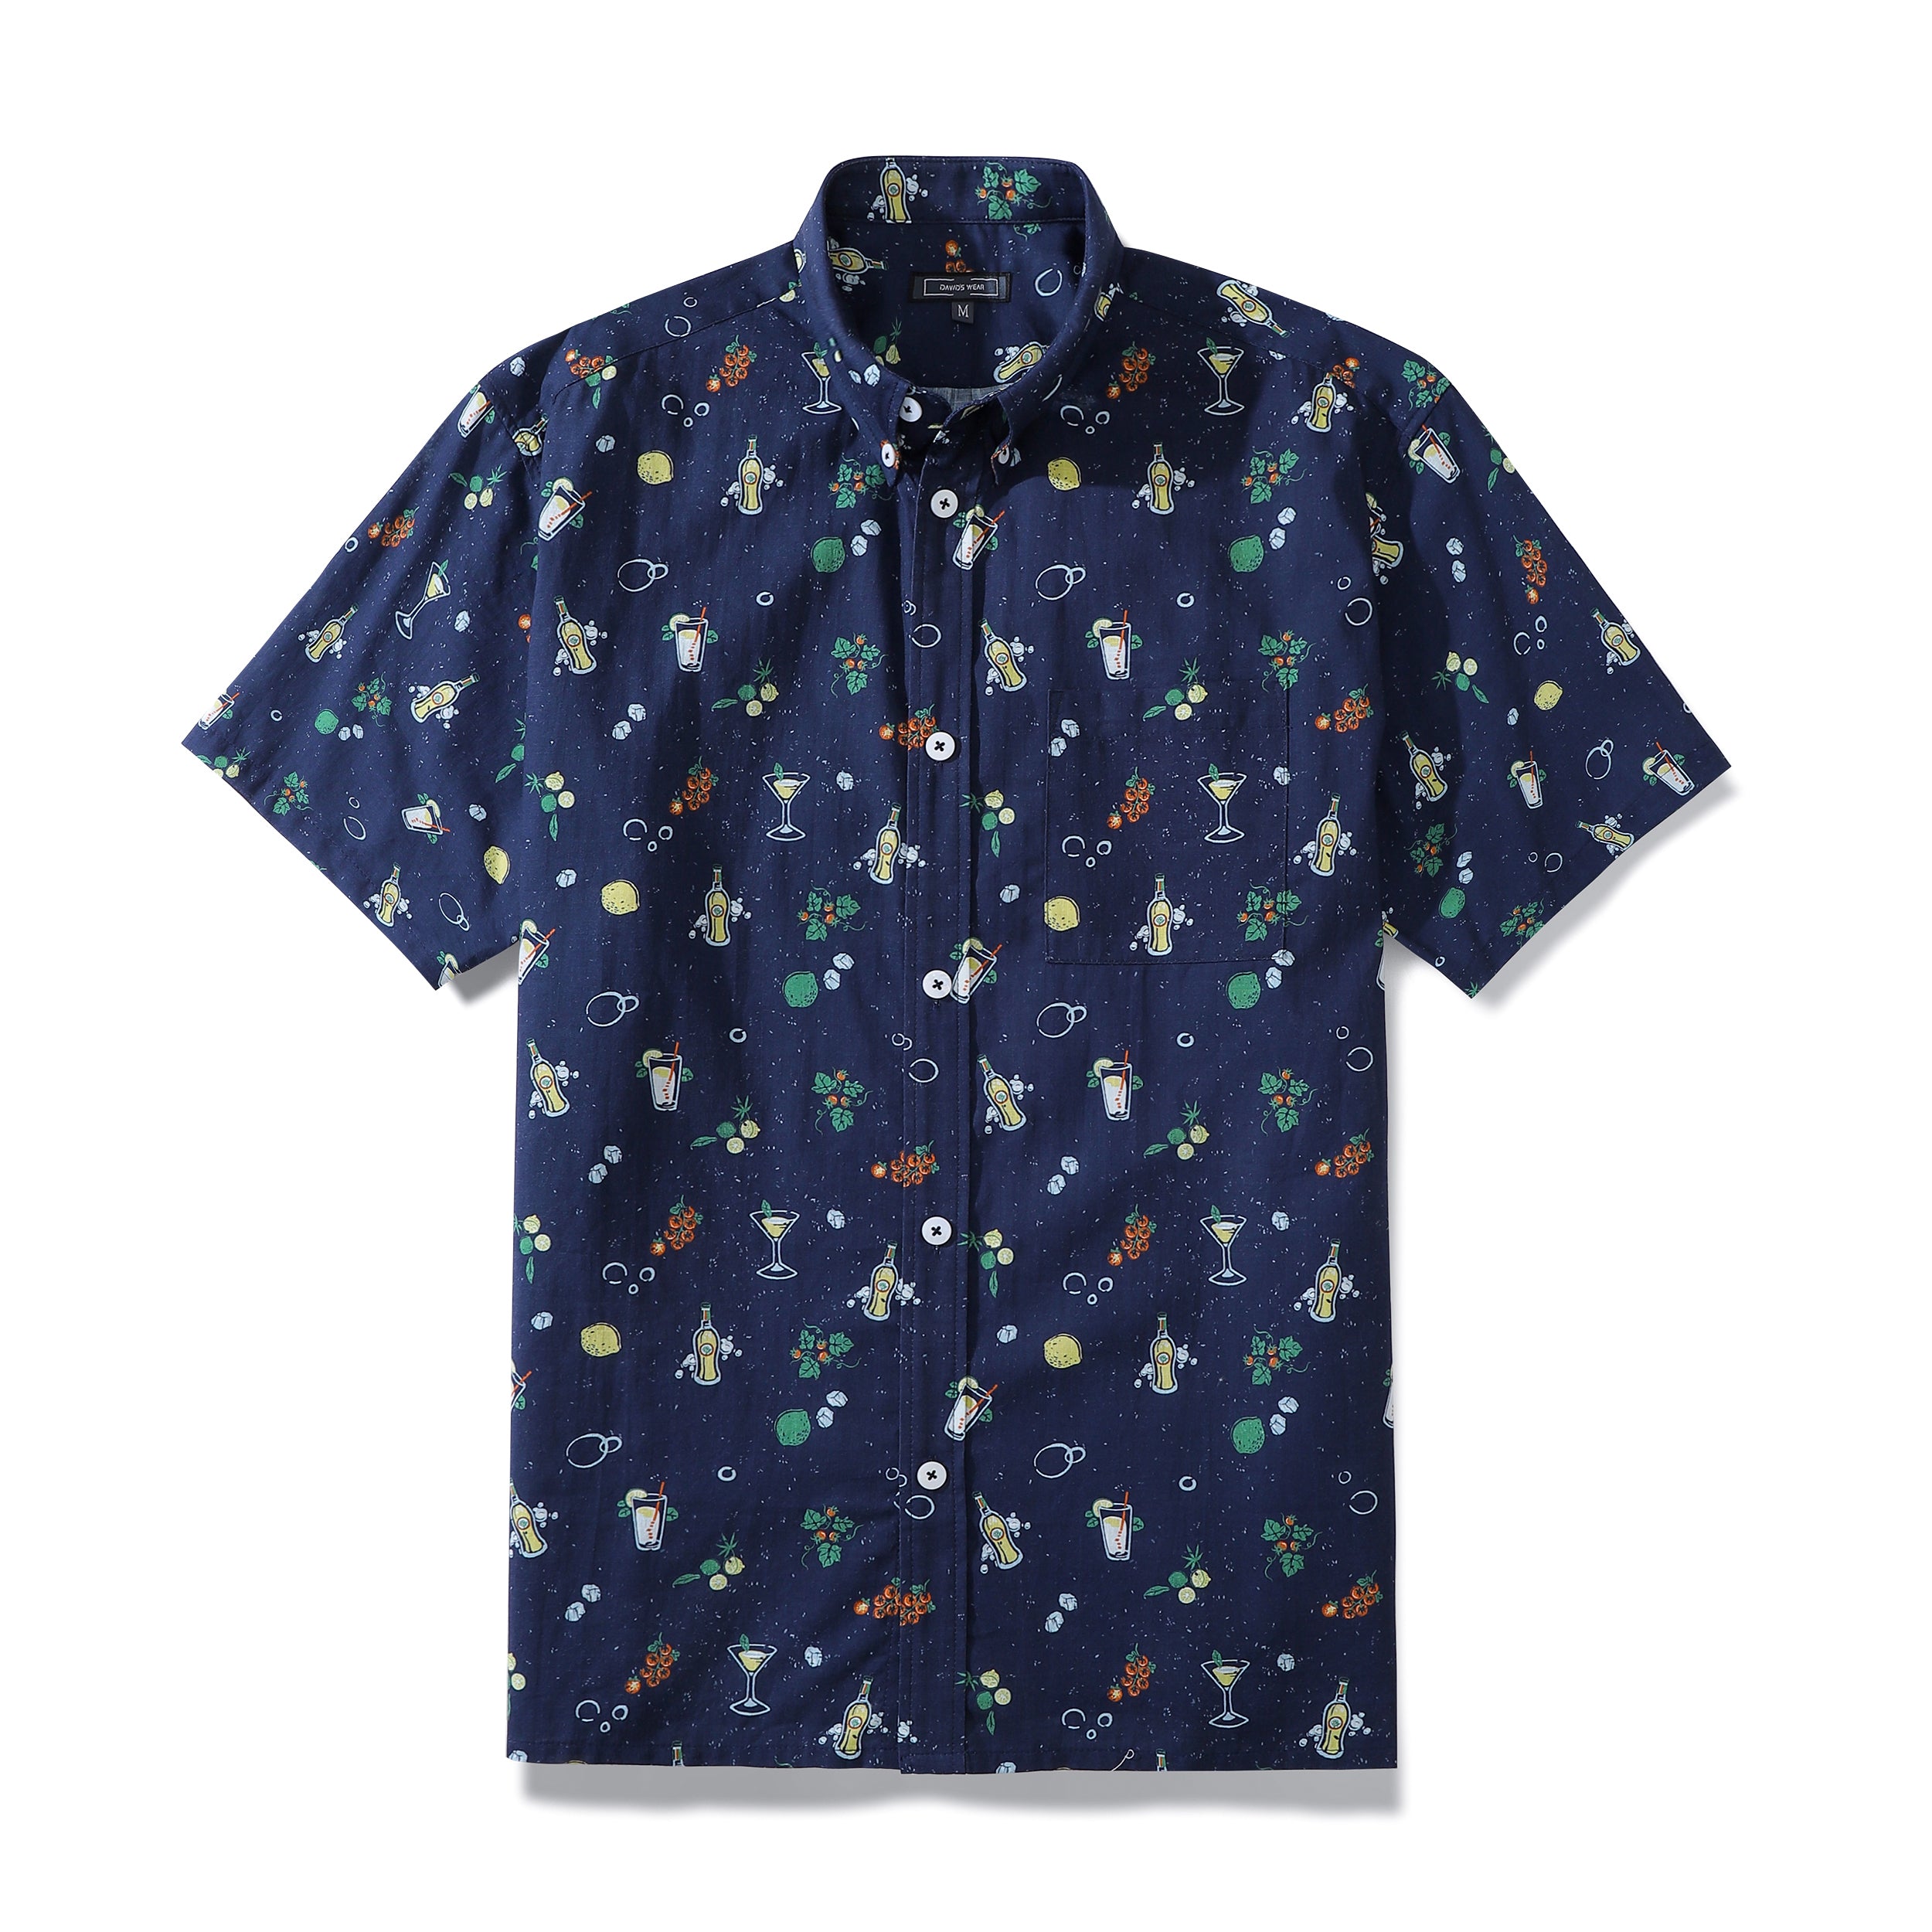 Men's Hawaiian Shirt Dark Blue Cocktail Print Cotton Short Sleeve Button Down